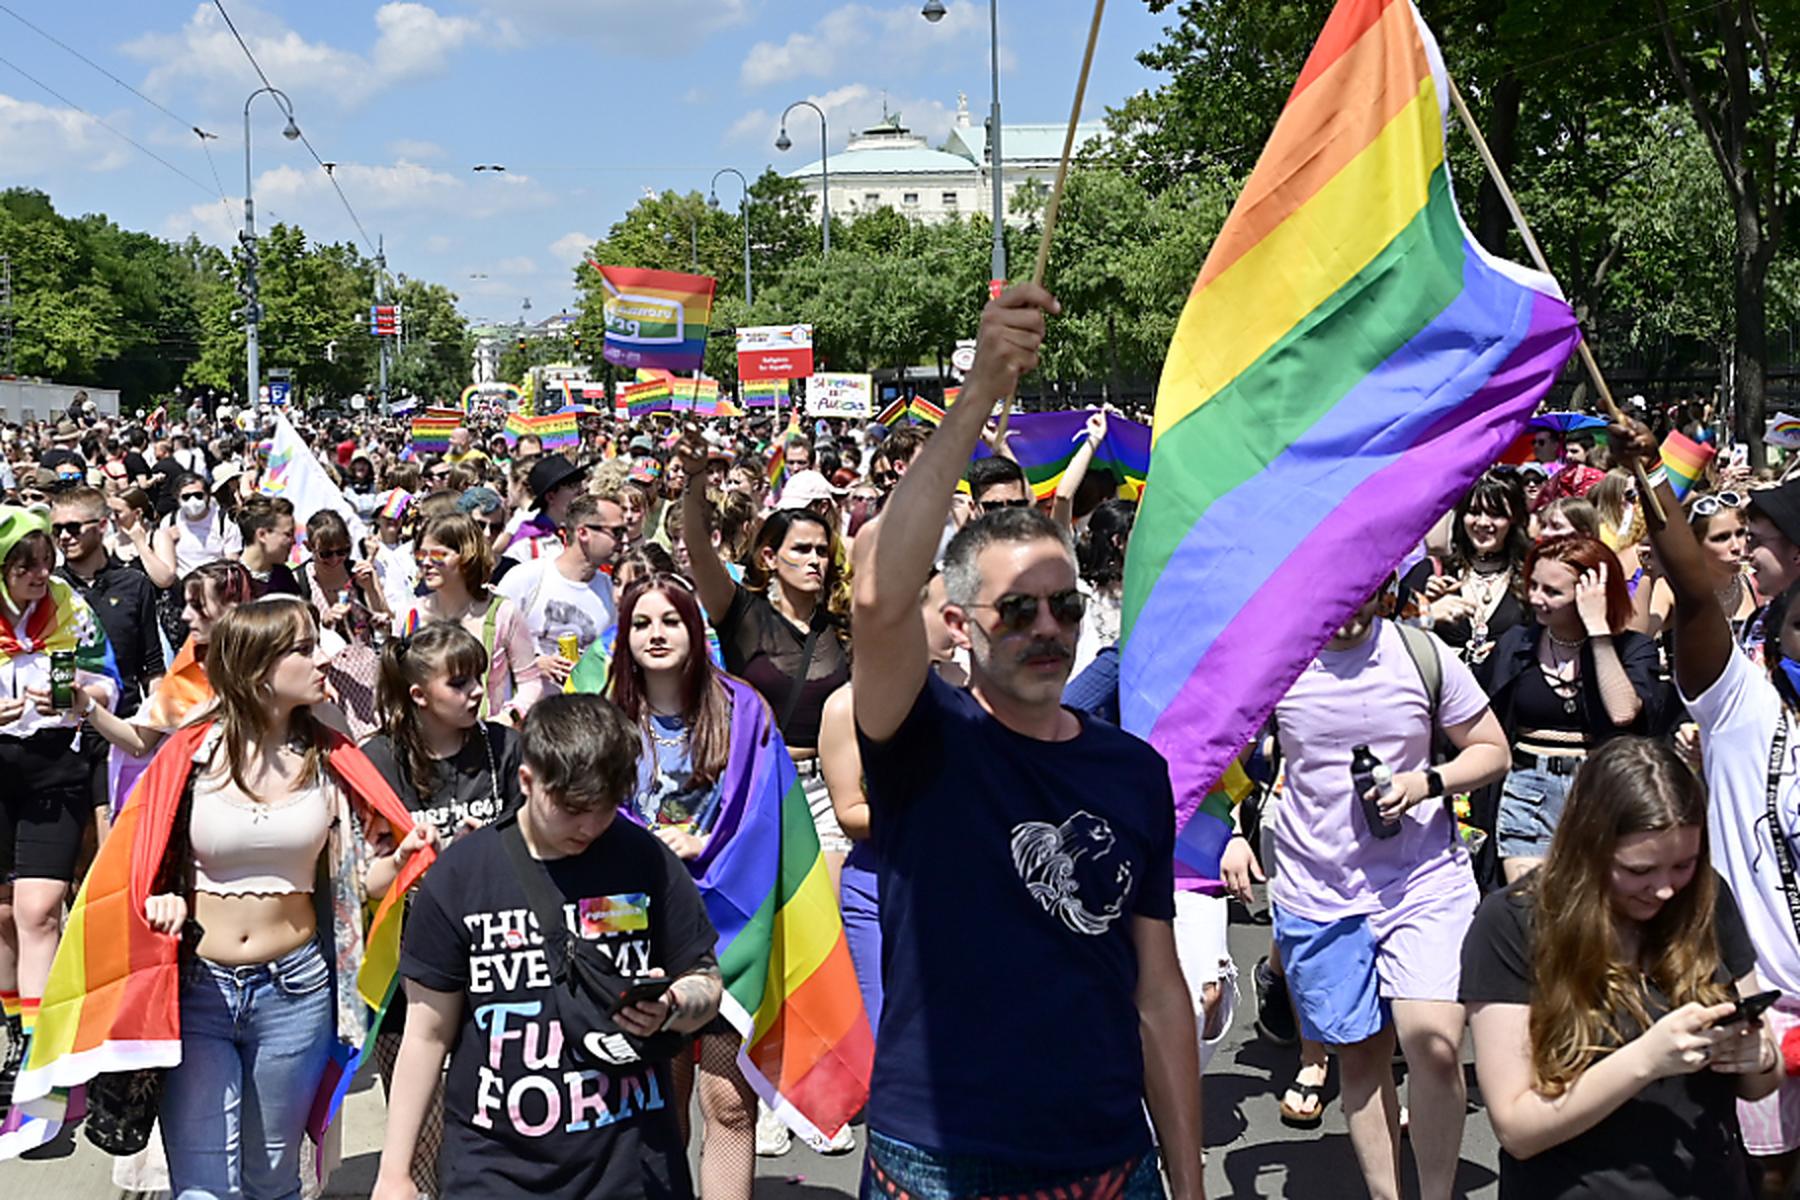 Wien: Vienna Pride - Regenbogenparade heuer am 8. Juni in Wien